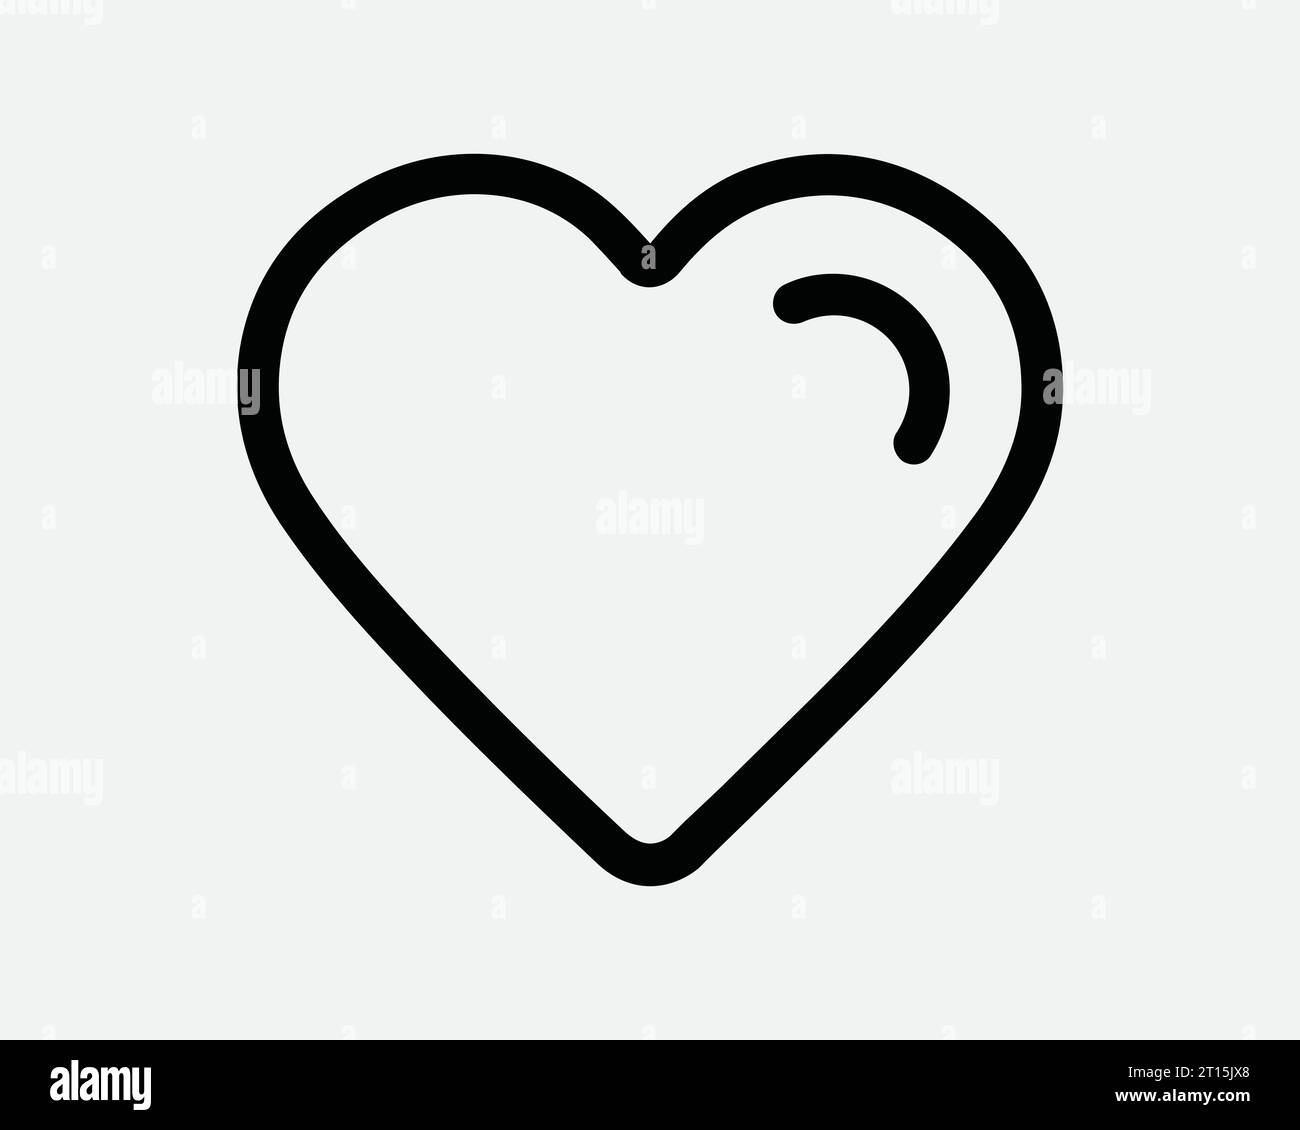 Heart Symbol Icon Love Sign Romantic Romance Feelings Wedding Valentine Valentines Lover Design Passion Heartbeat Black White Outline Shape EPS Vector Stock Vector